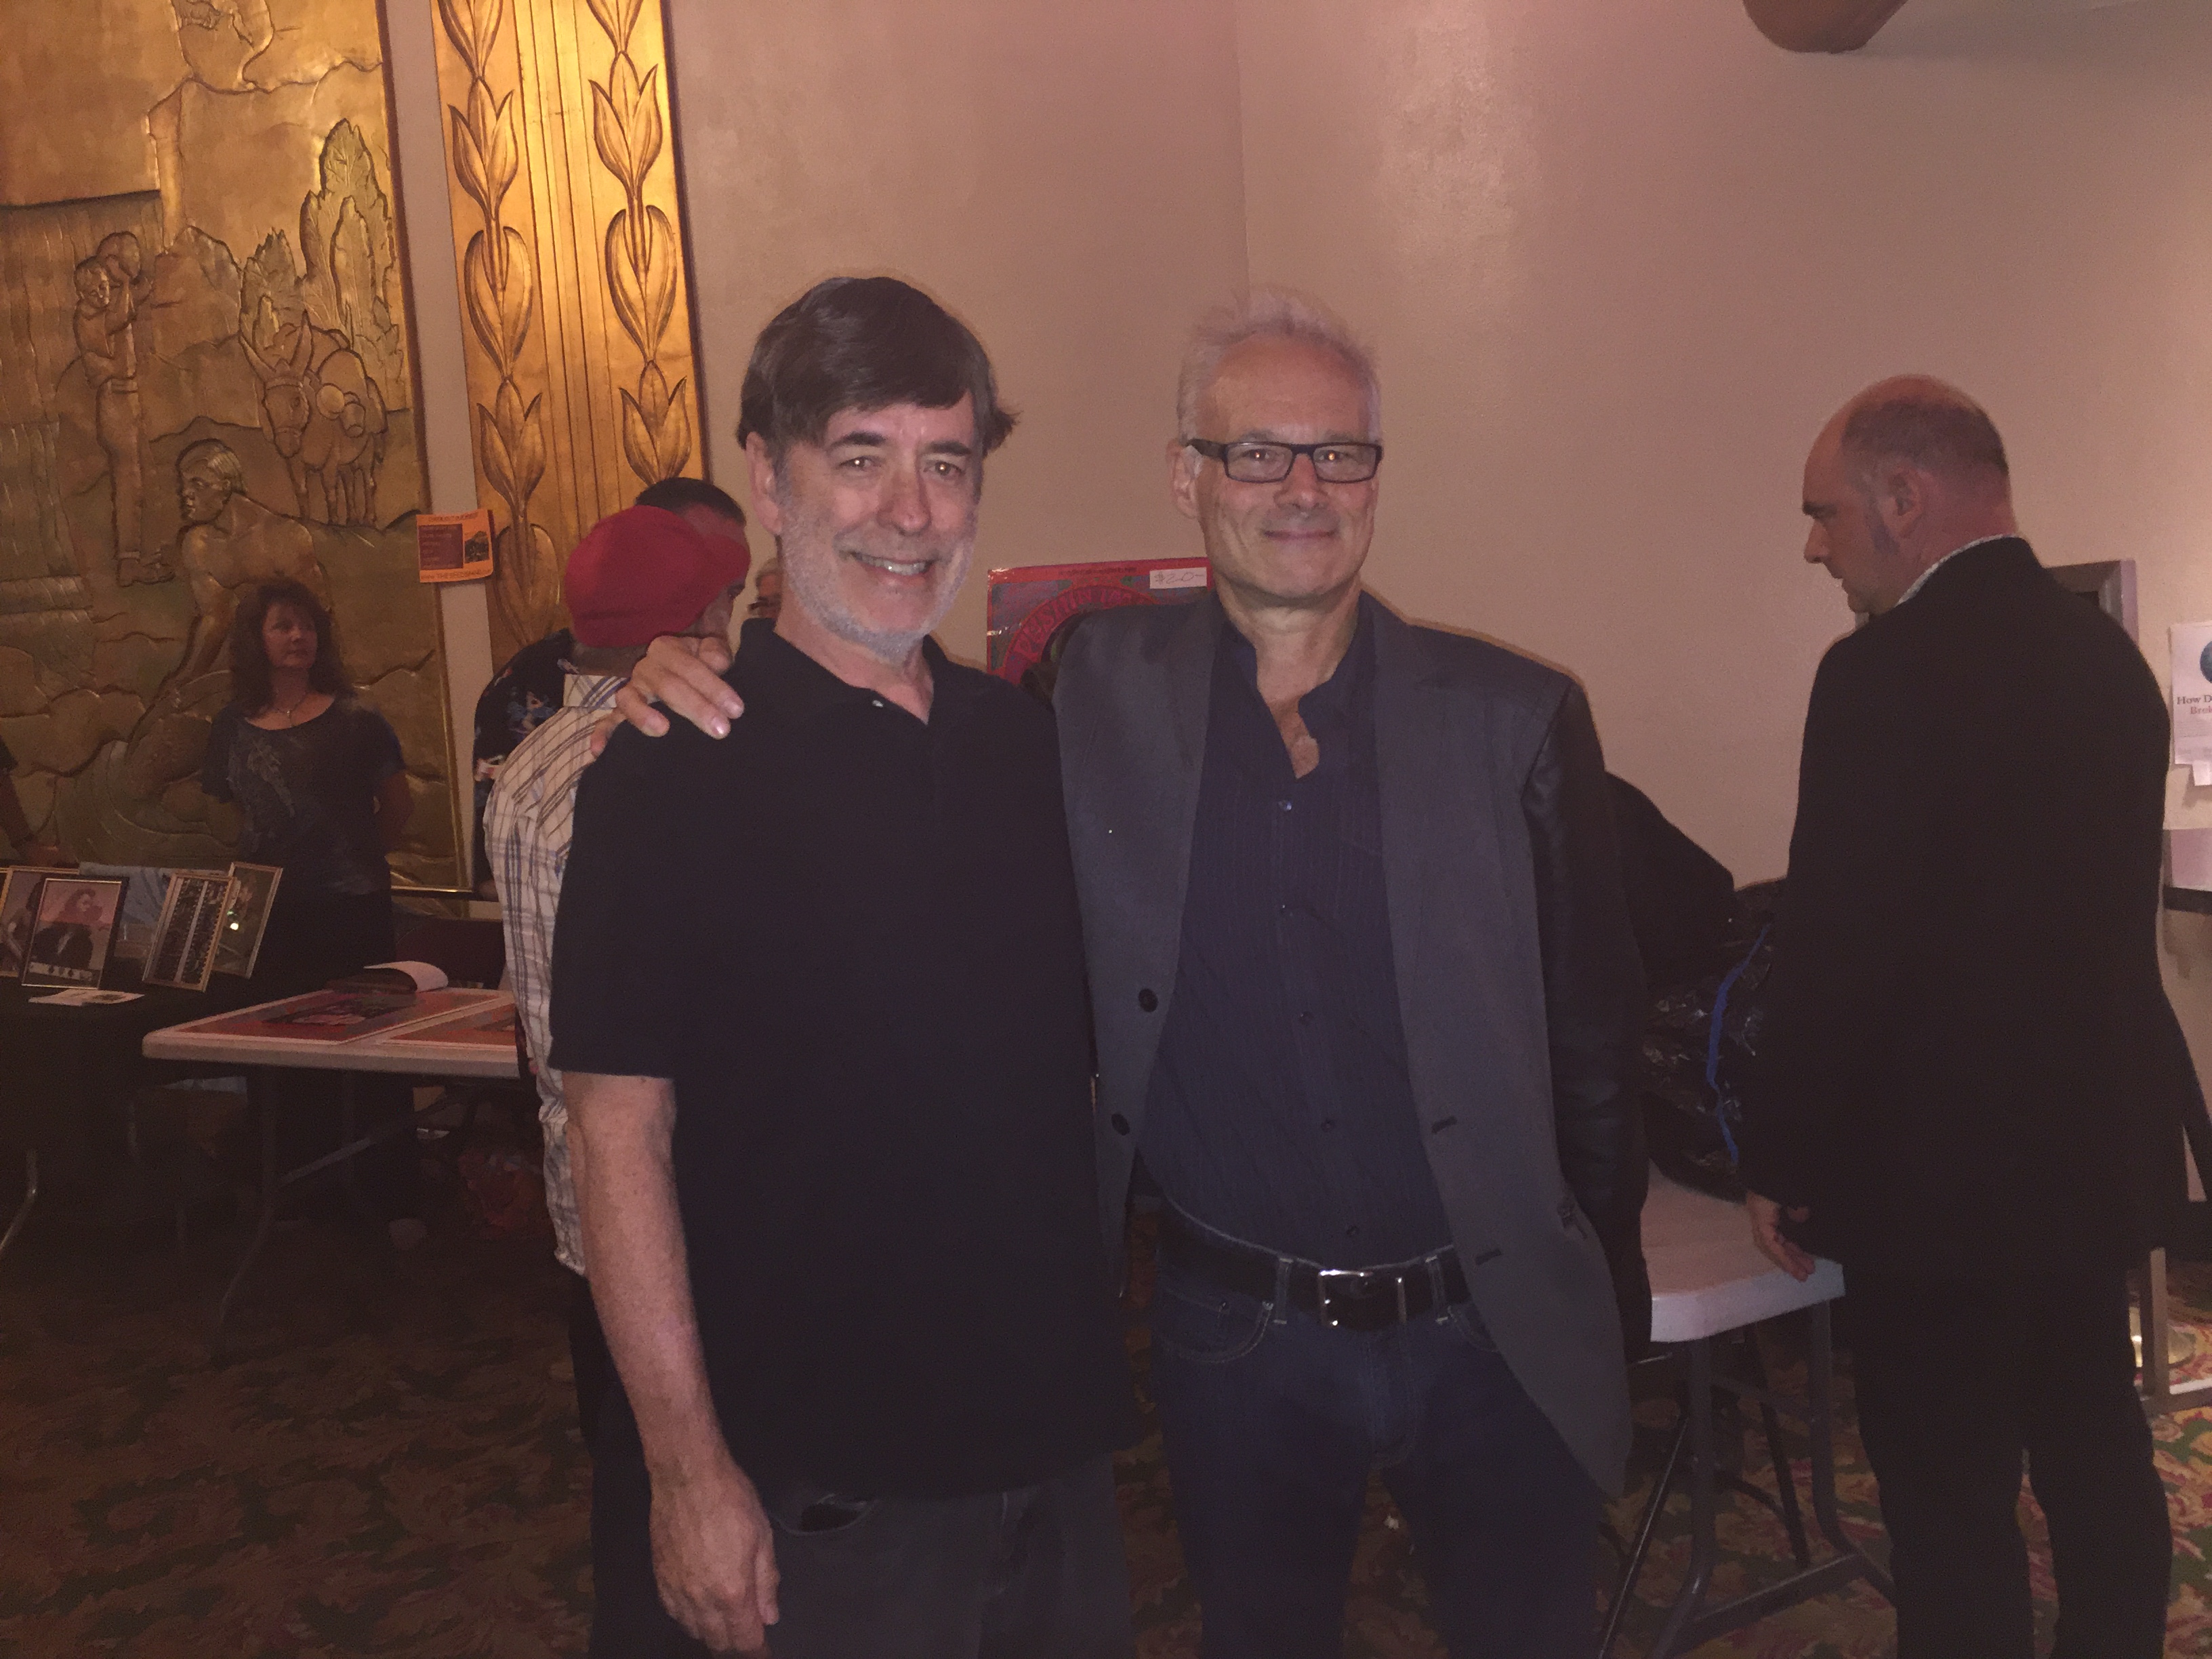 Left to right: Steve Dakota, Neil Norman, director, screening, The Seeds: Pushin' Too Hard (2014), lobby, The Crest, Sacramento, Calif., October 2015.